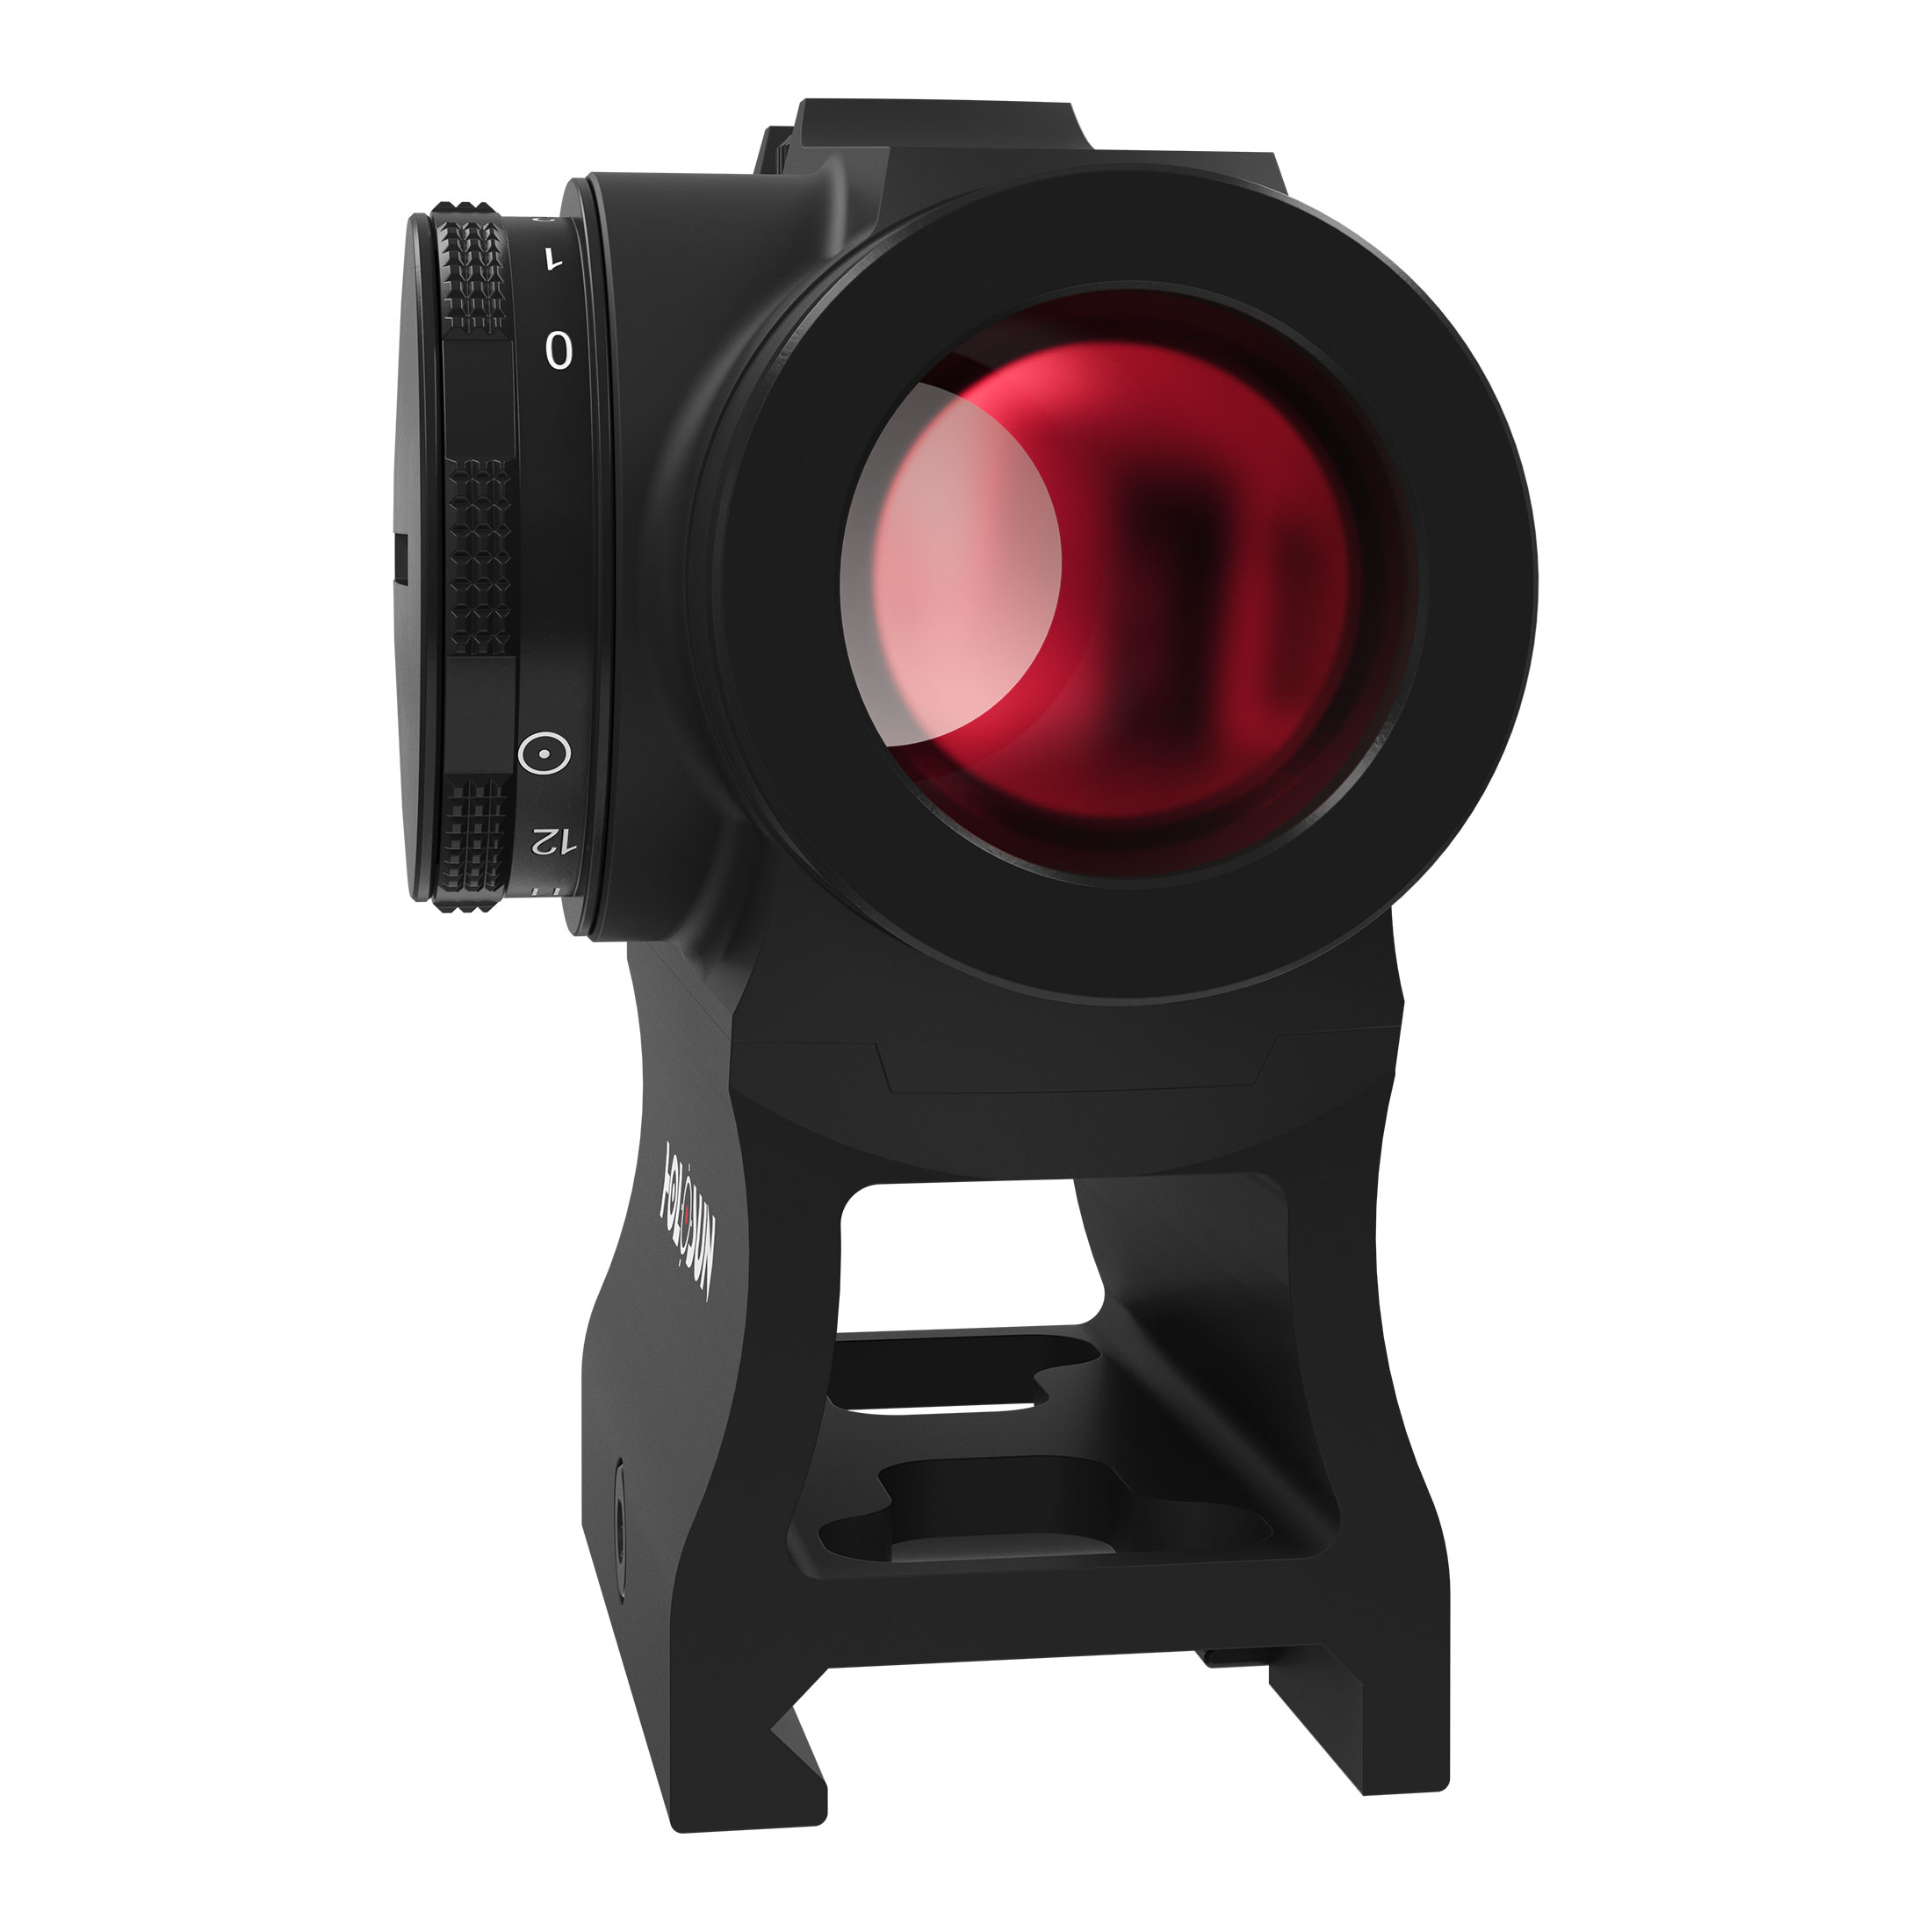 Holosun Dot Sight CLASSIC HS503R-RD